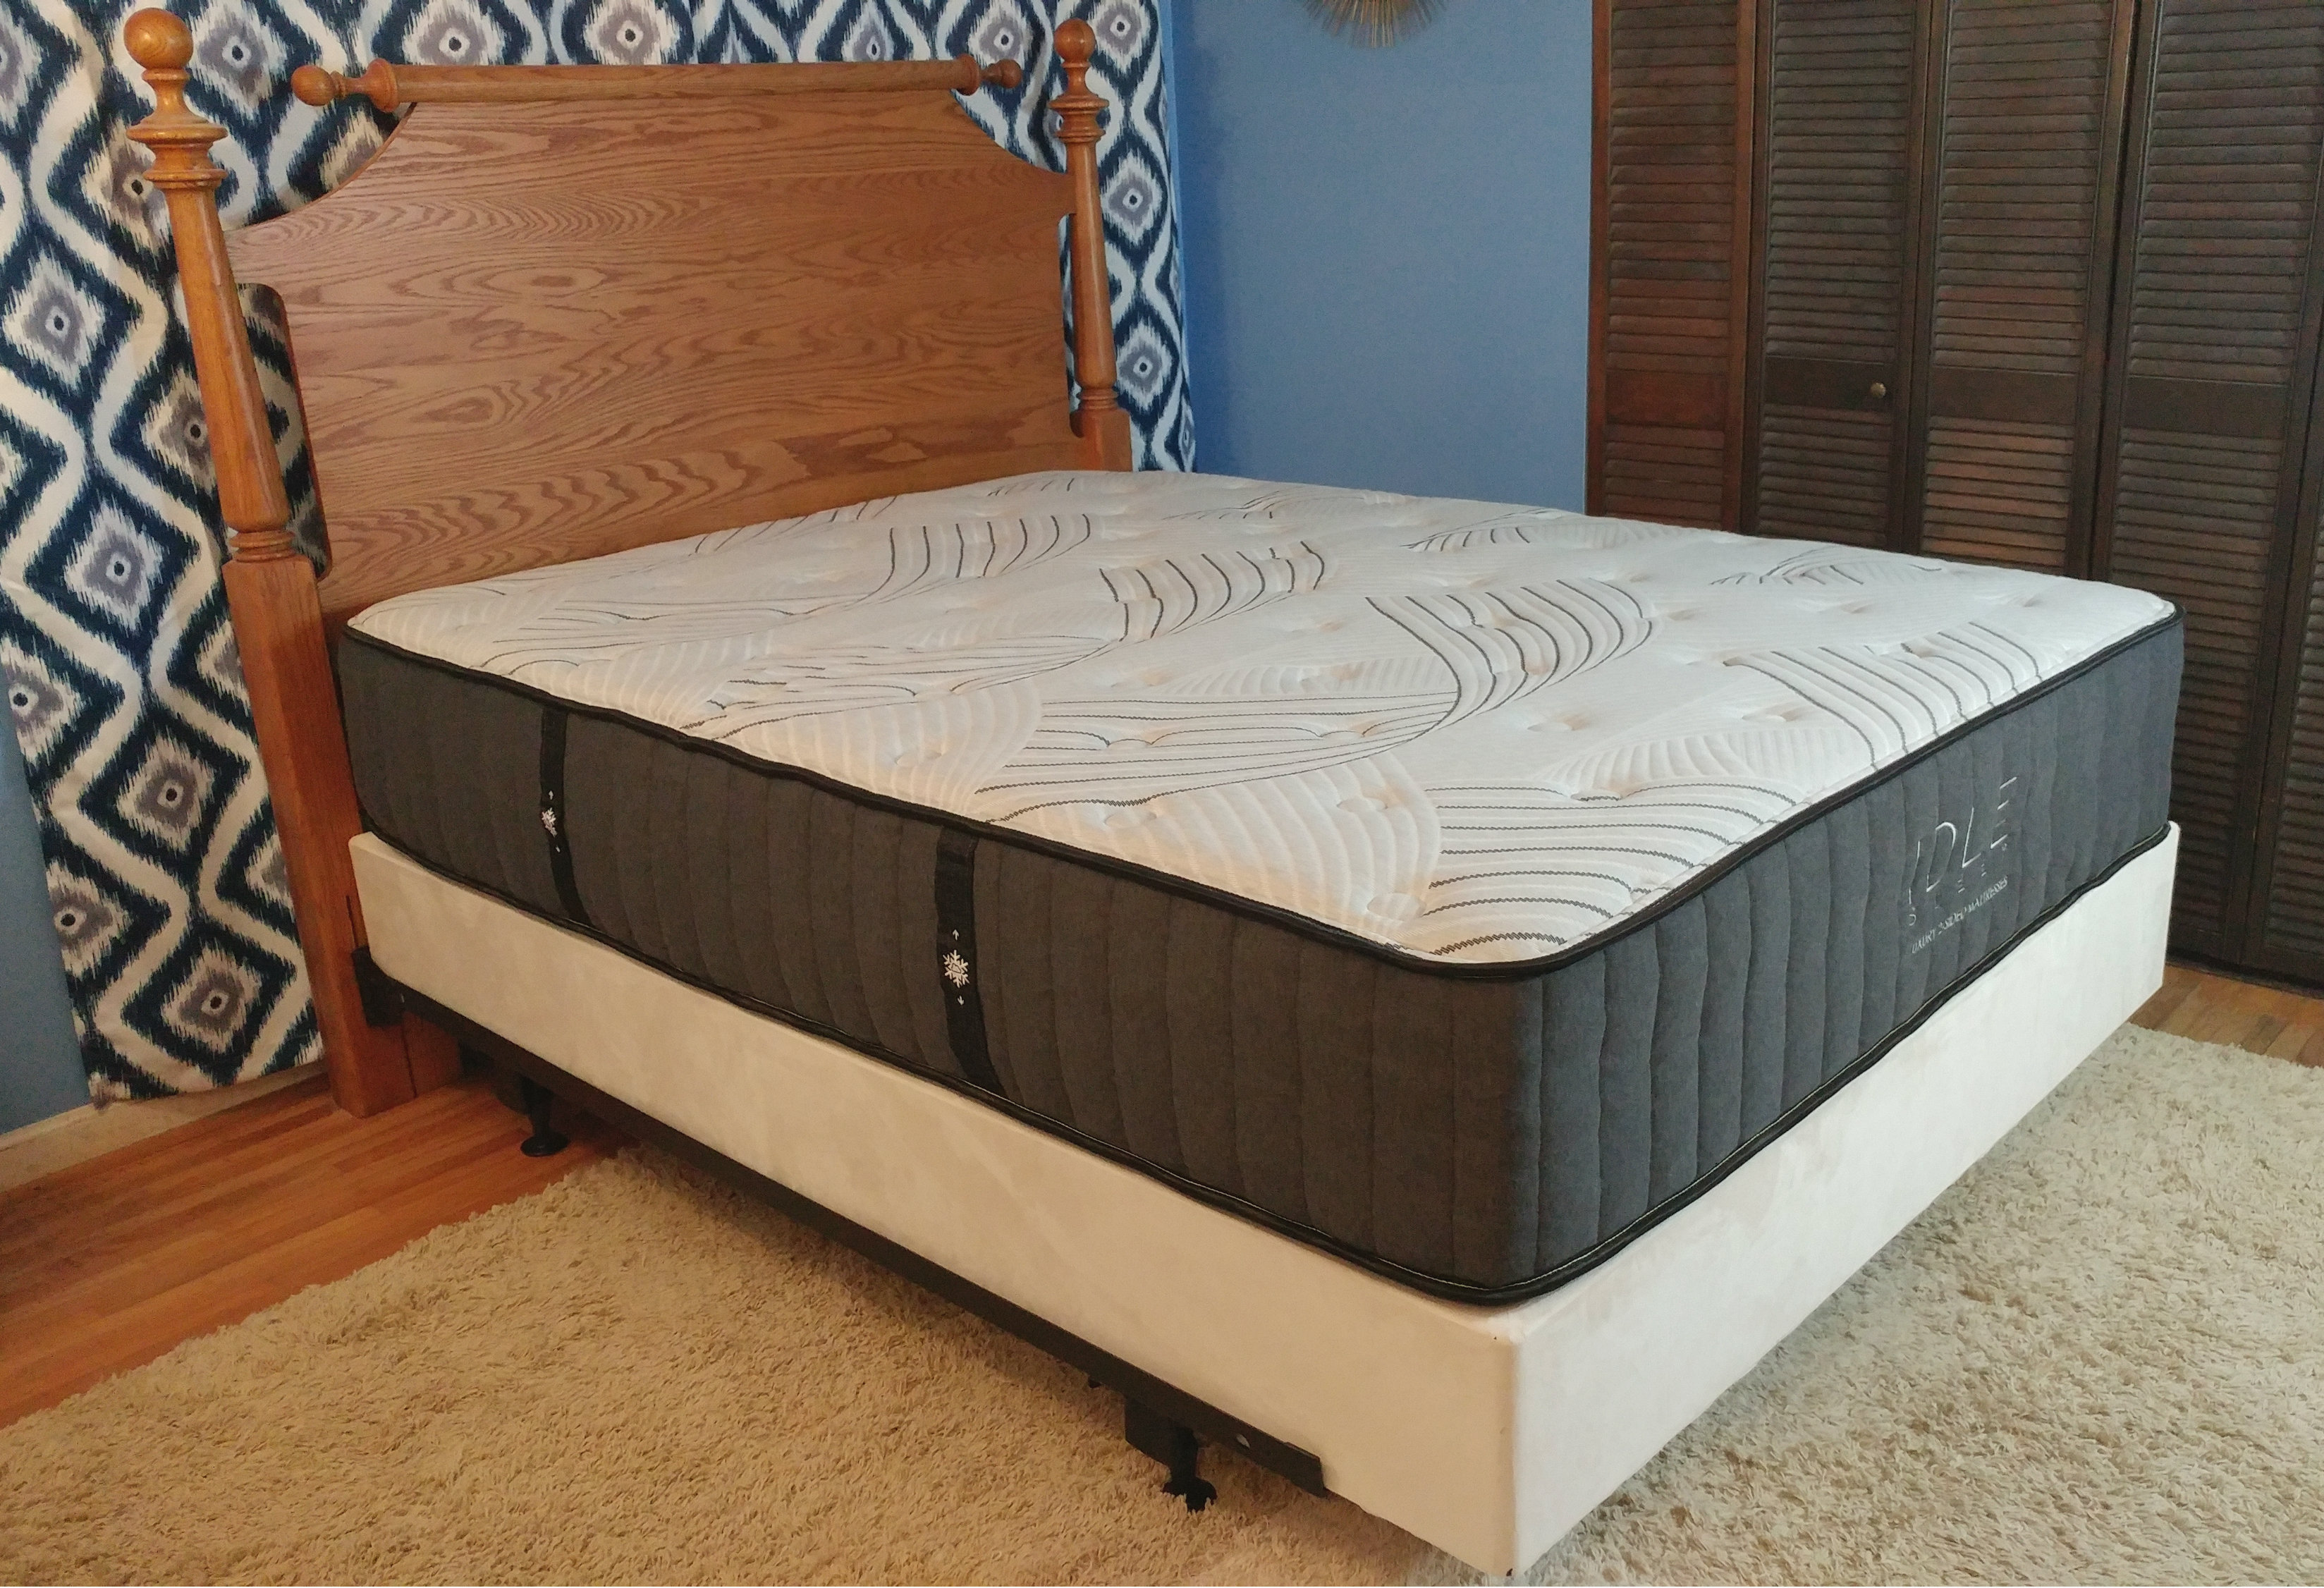 idle sleep mattress reviews